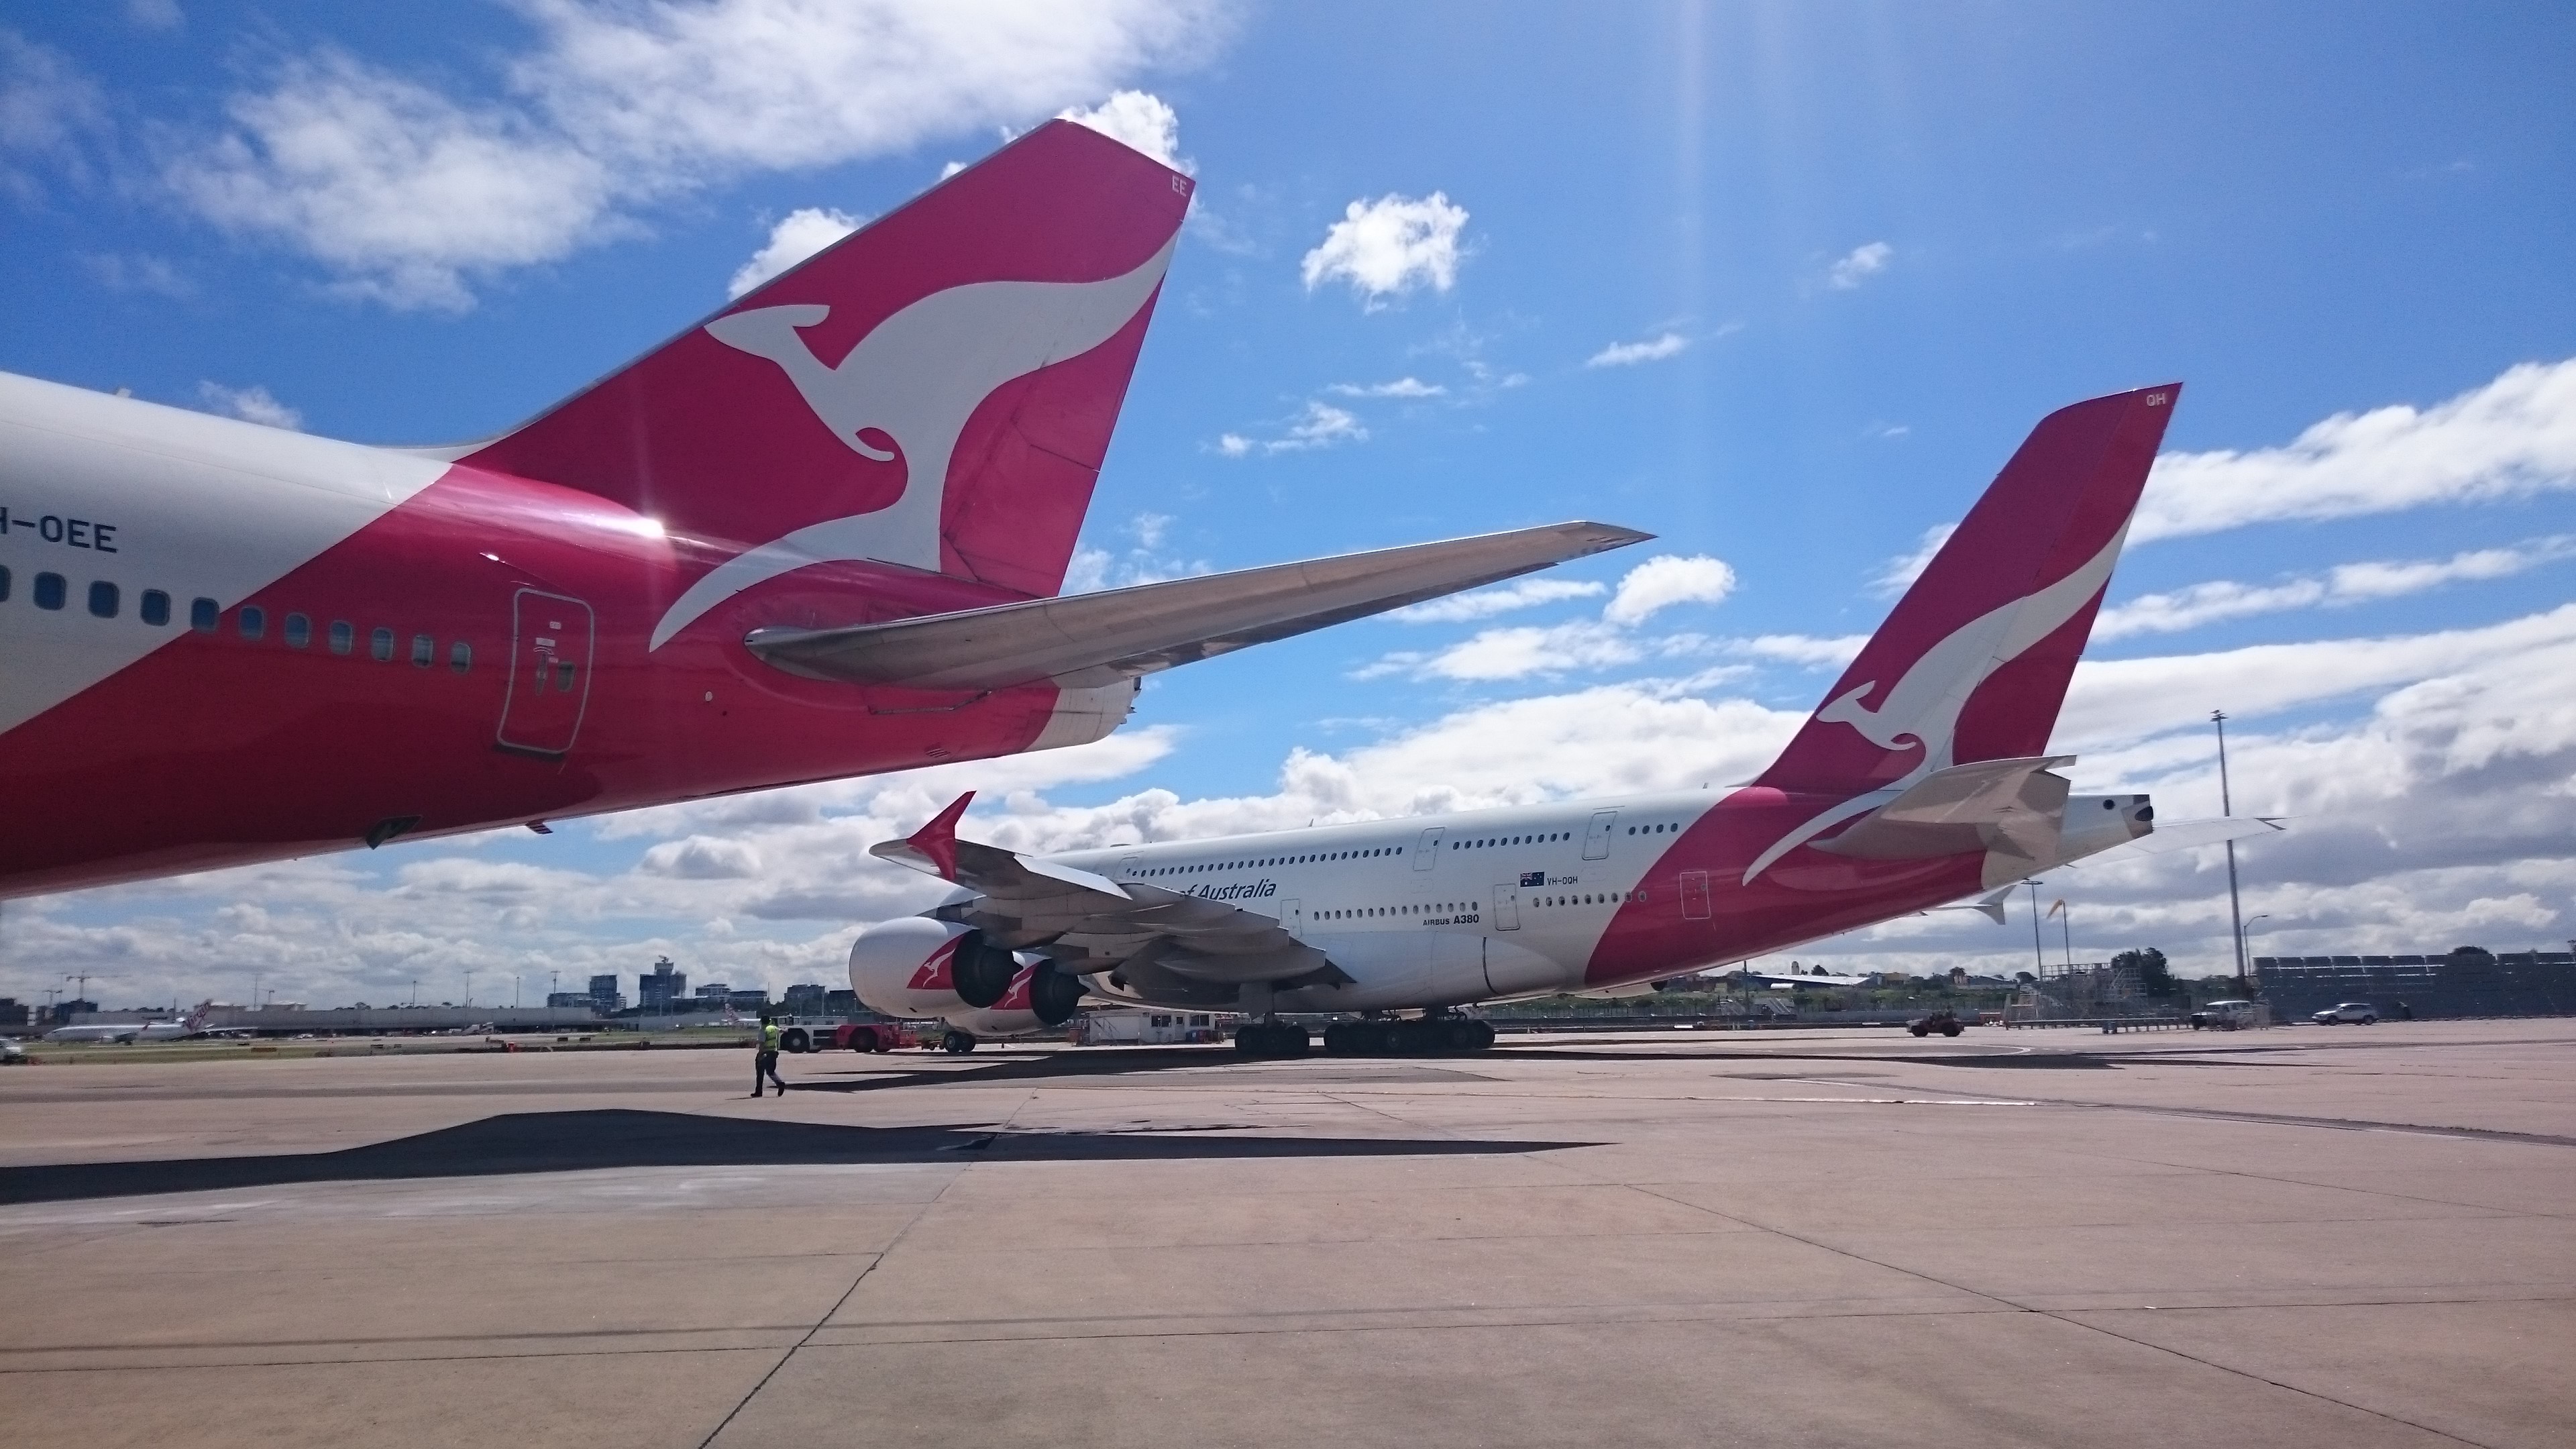 'Qantas is outsourcing the Spirit of Australia'